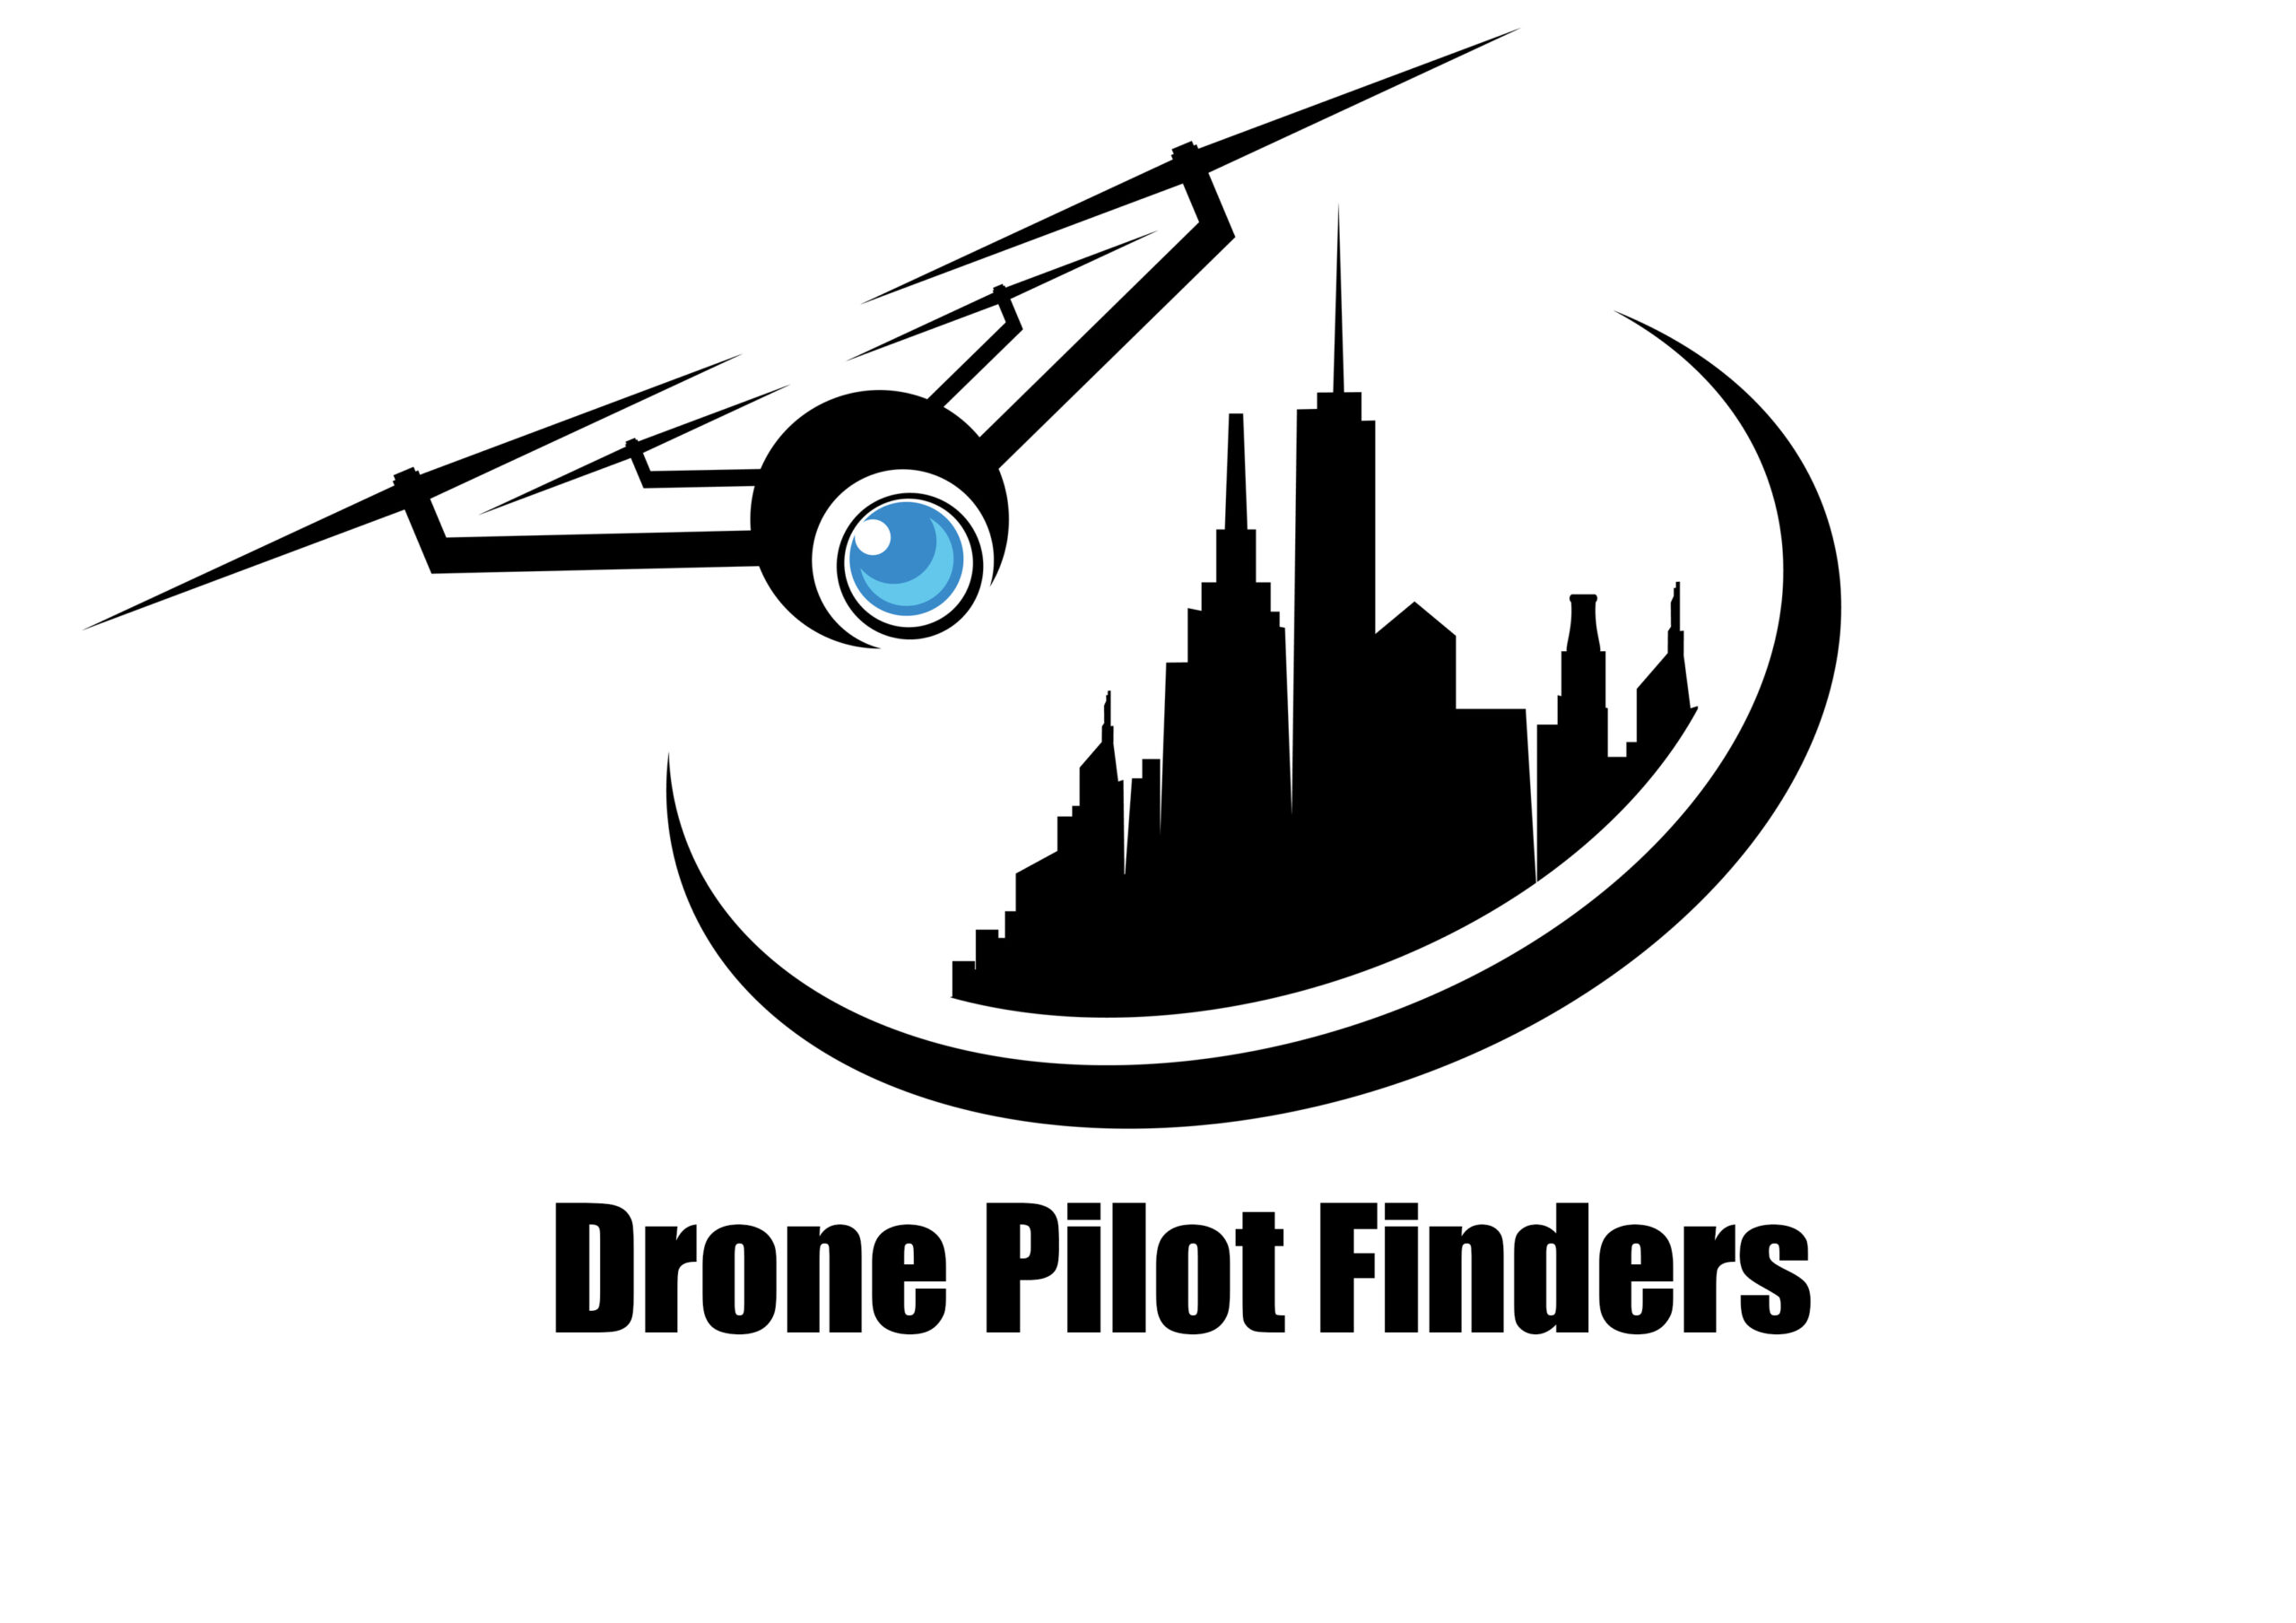 Drone Pilot Finders